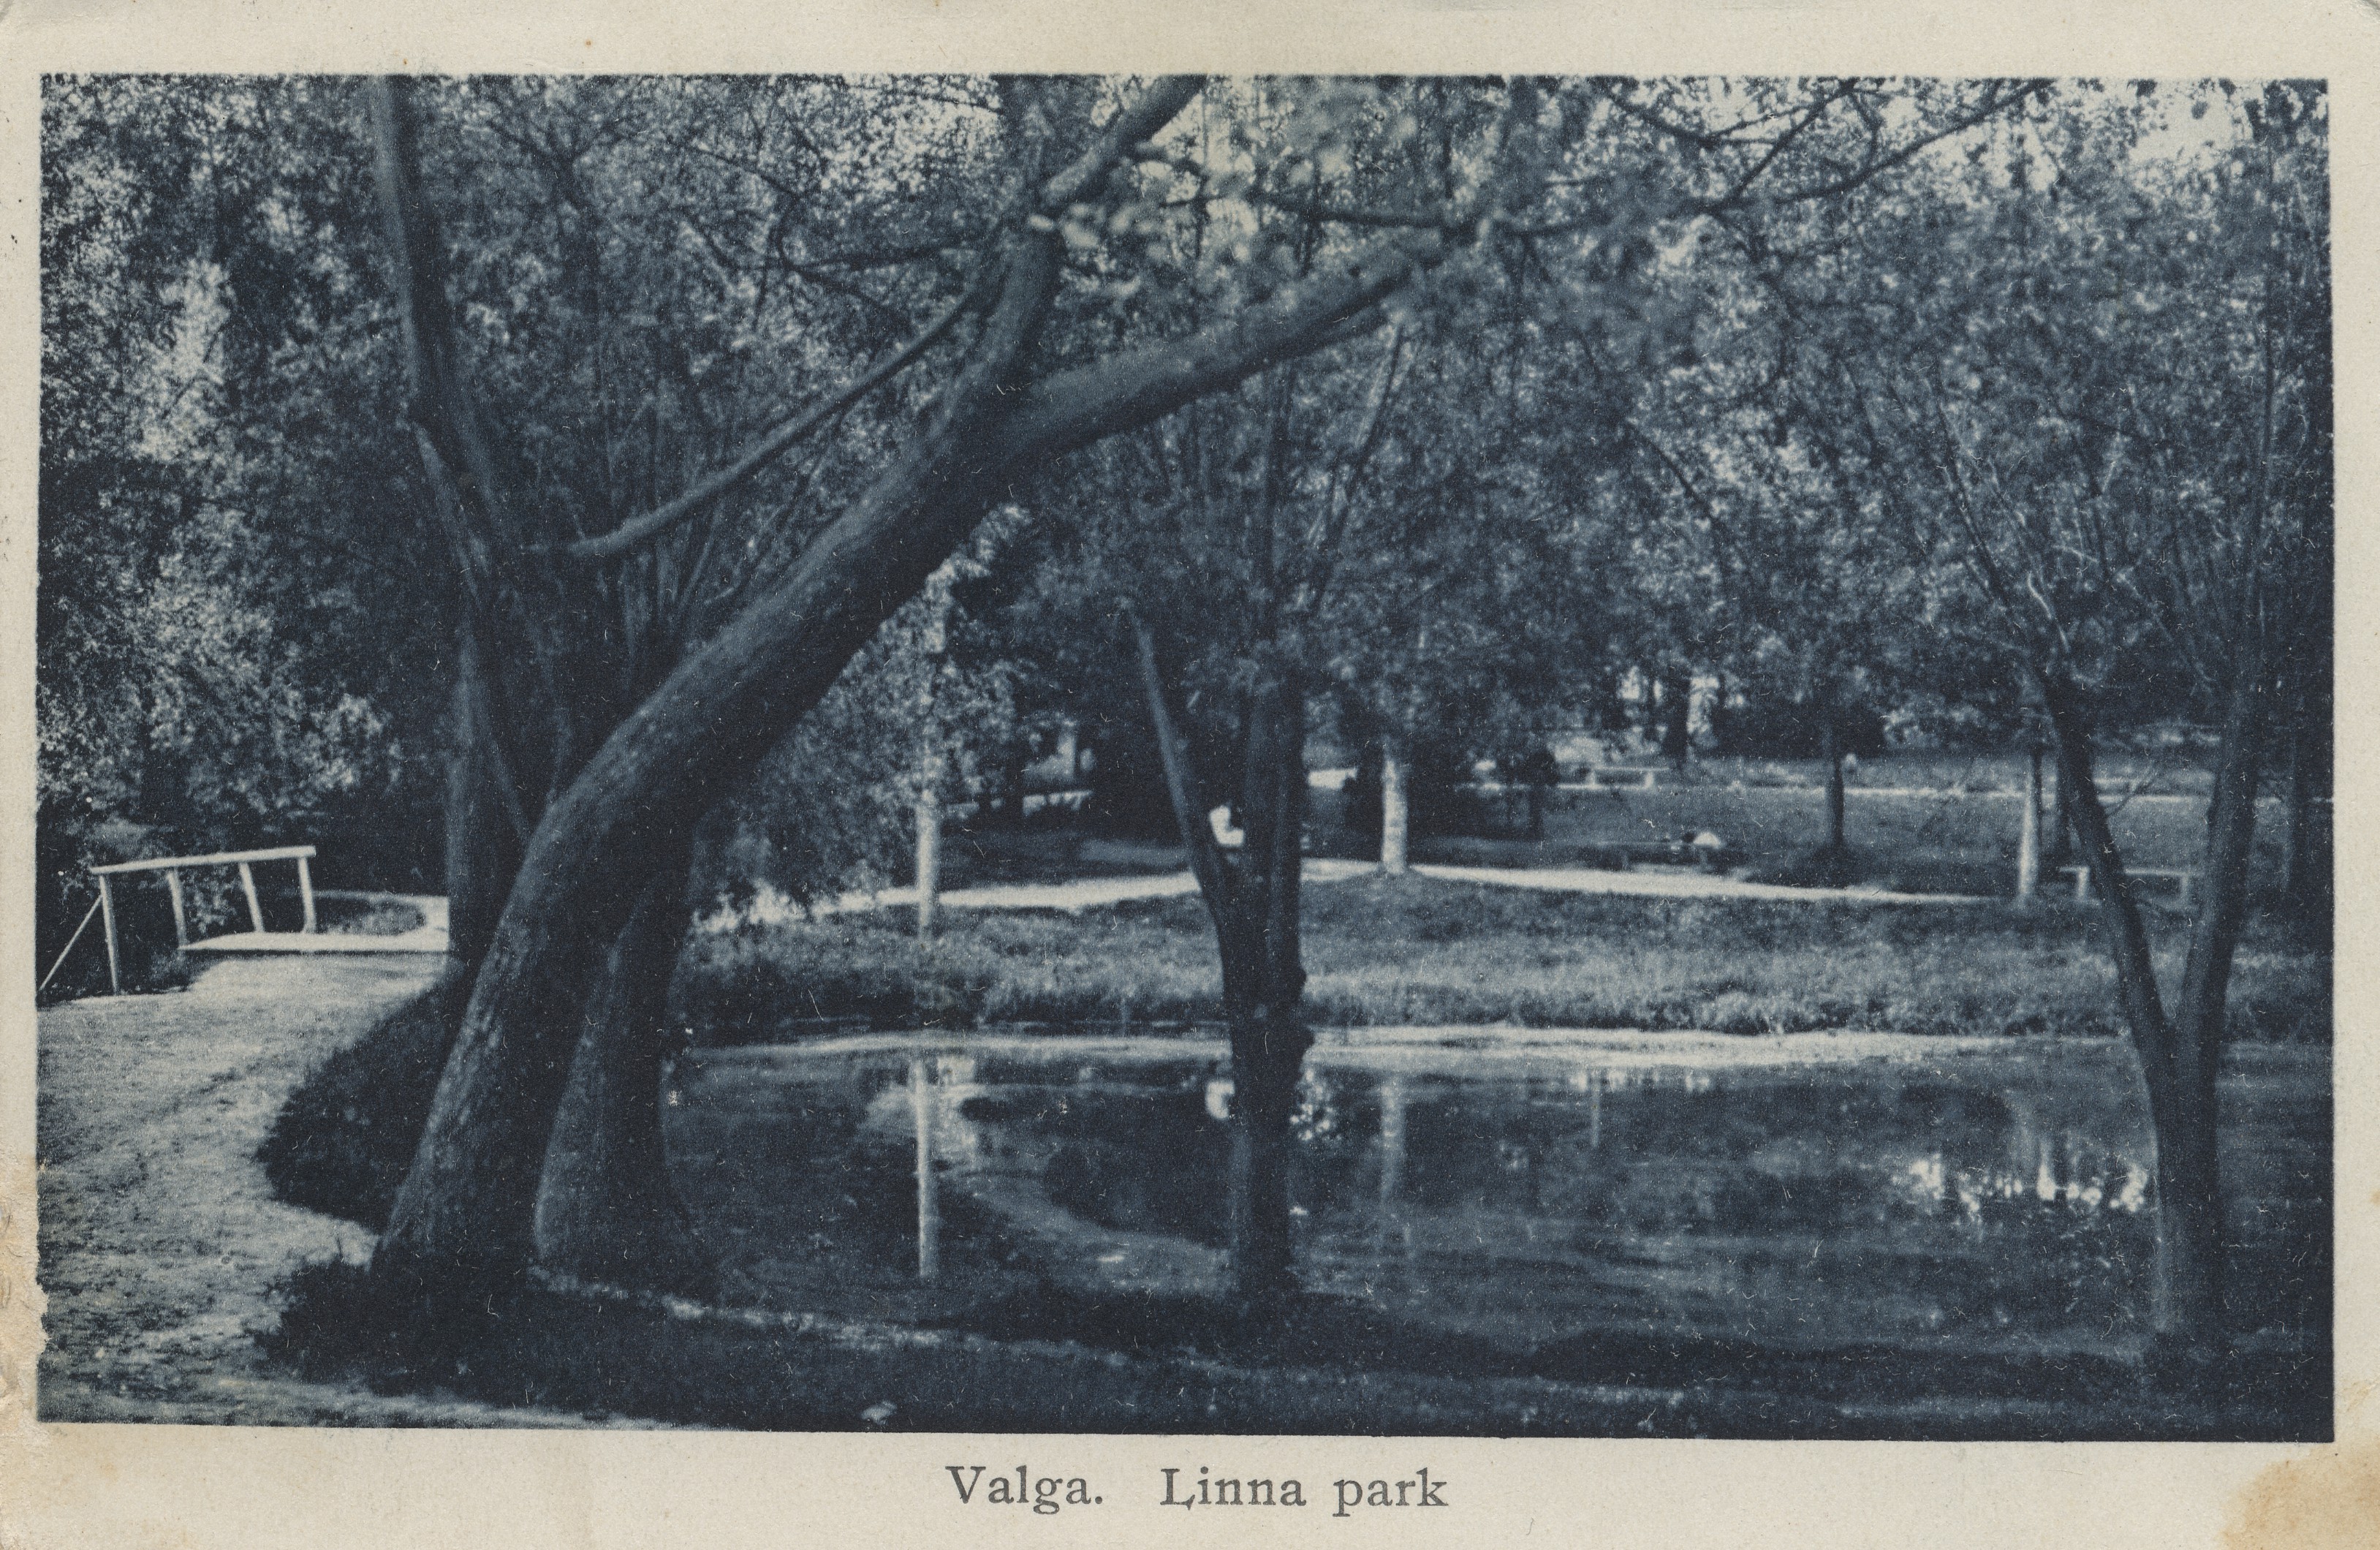 Park of Valga city